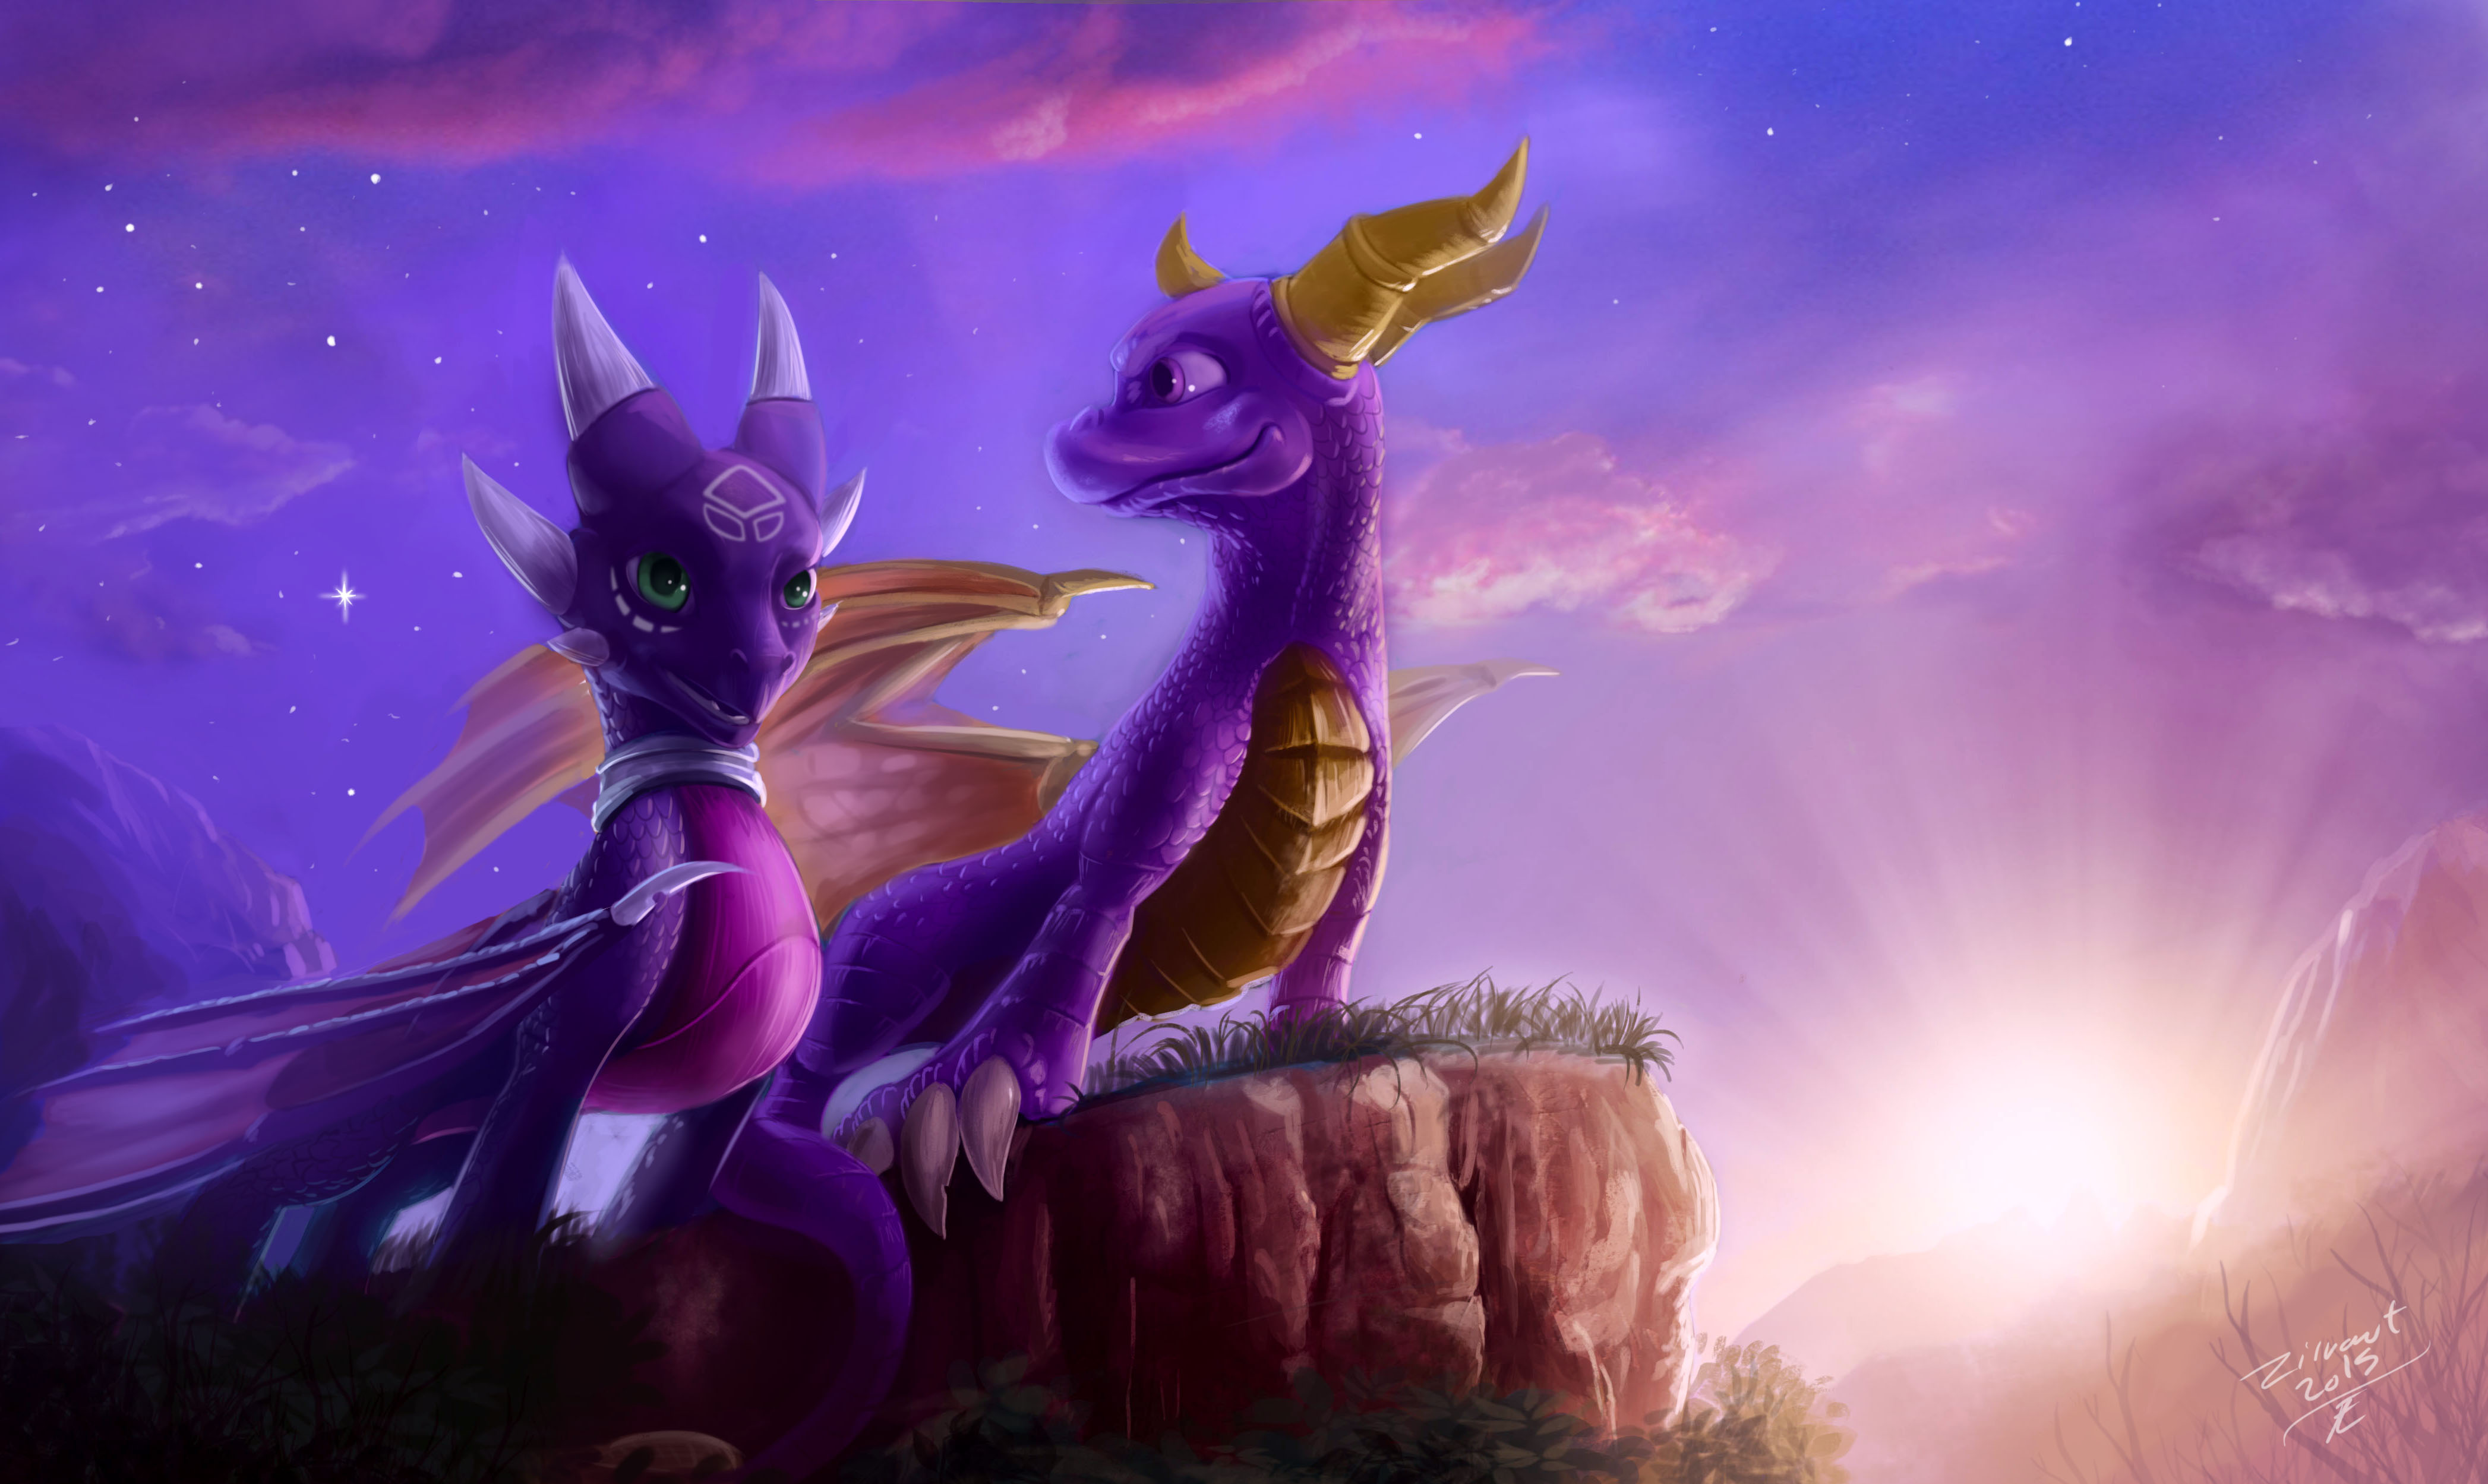 spyro the dragon wallpaper,dragon,fictional character,purple,sky,cg artwork